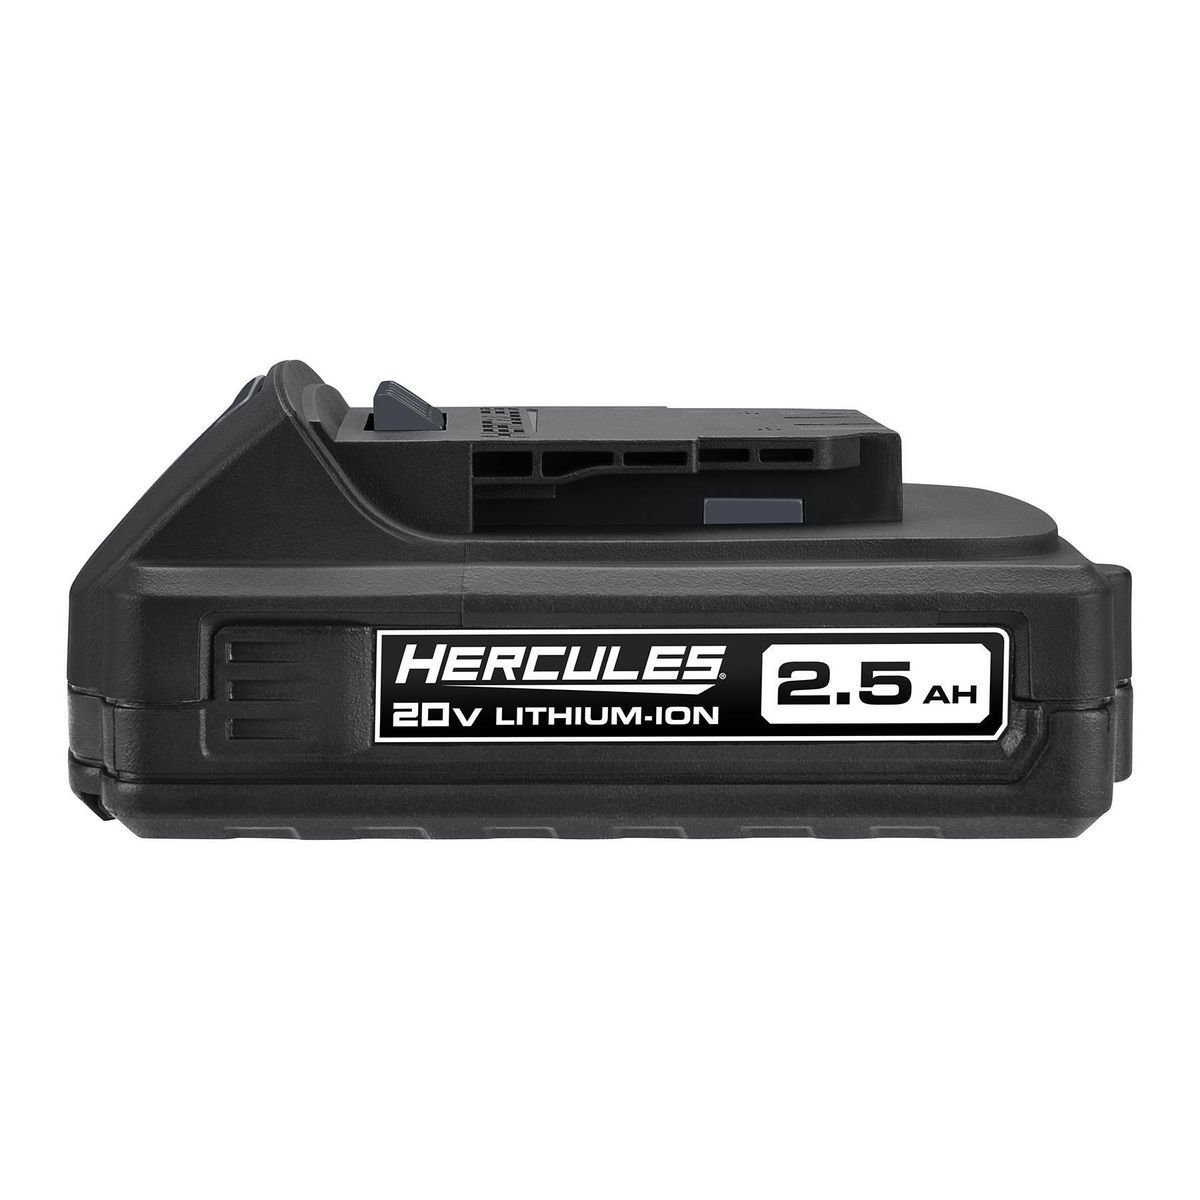 Hercules 20V 2.5 Ah Lithium-Ion Compact Battery